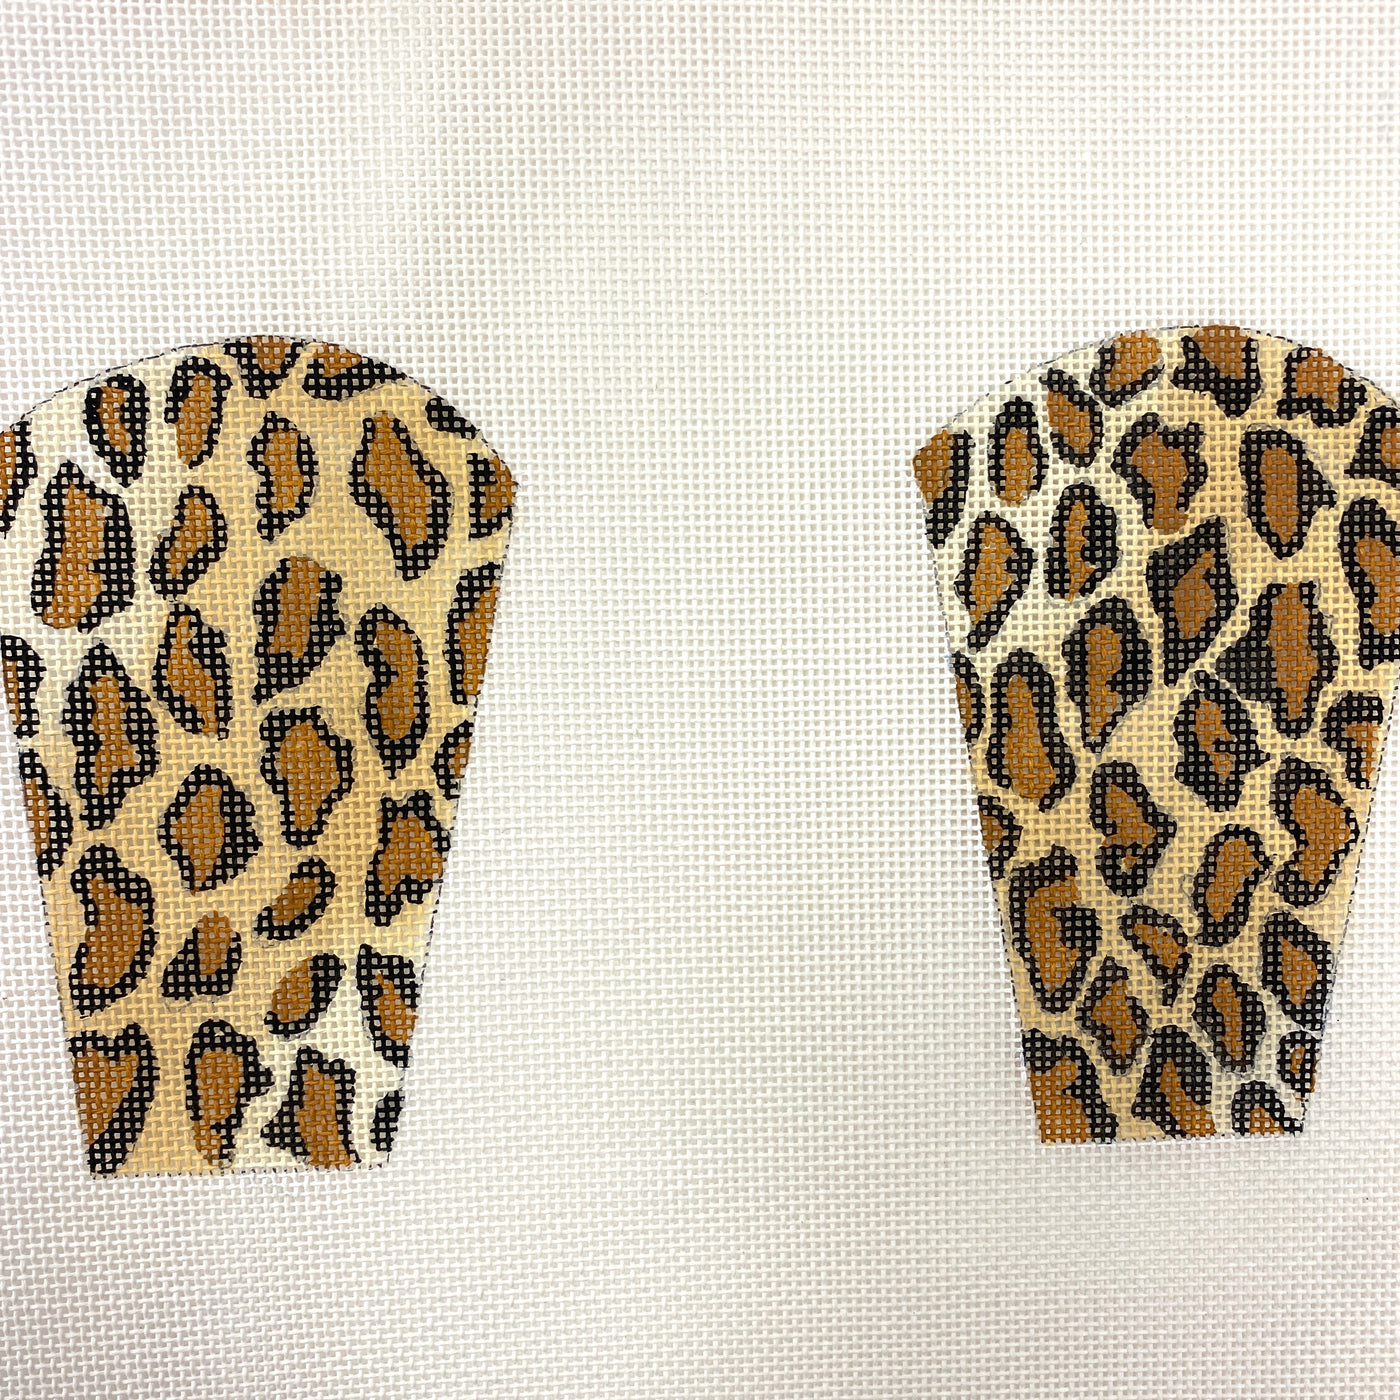 Cheetah Scissors Case Needlepoint Canvas